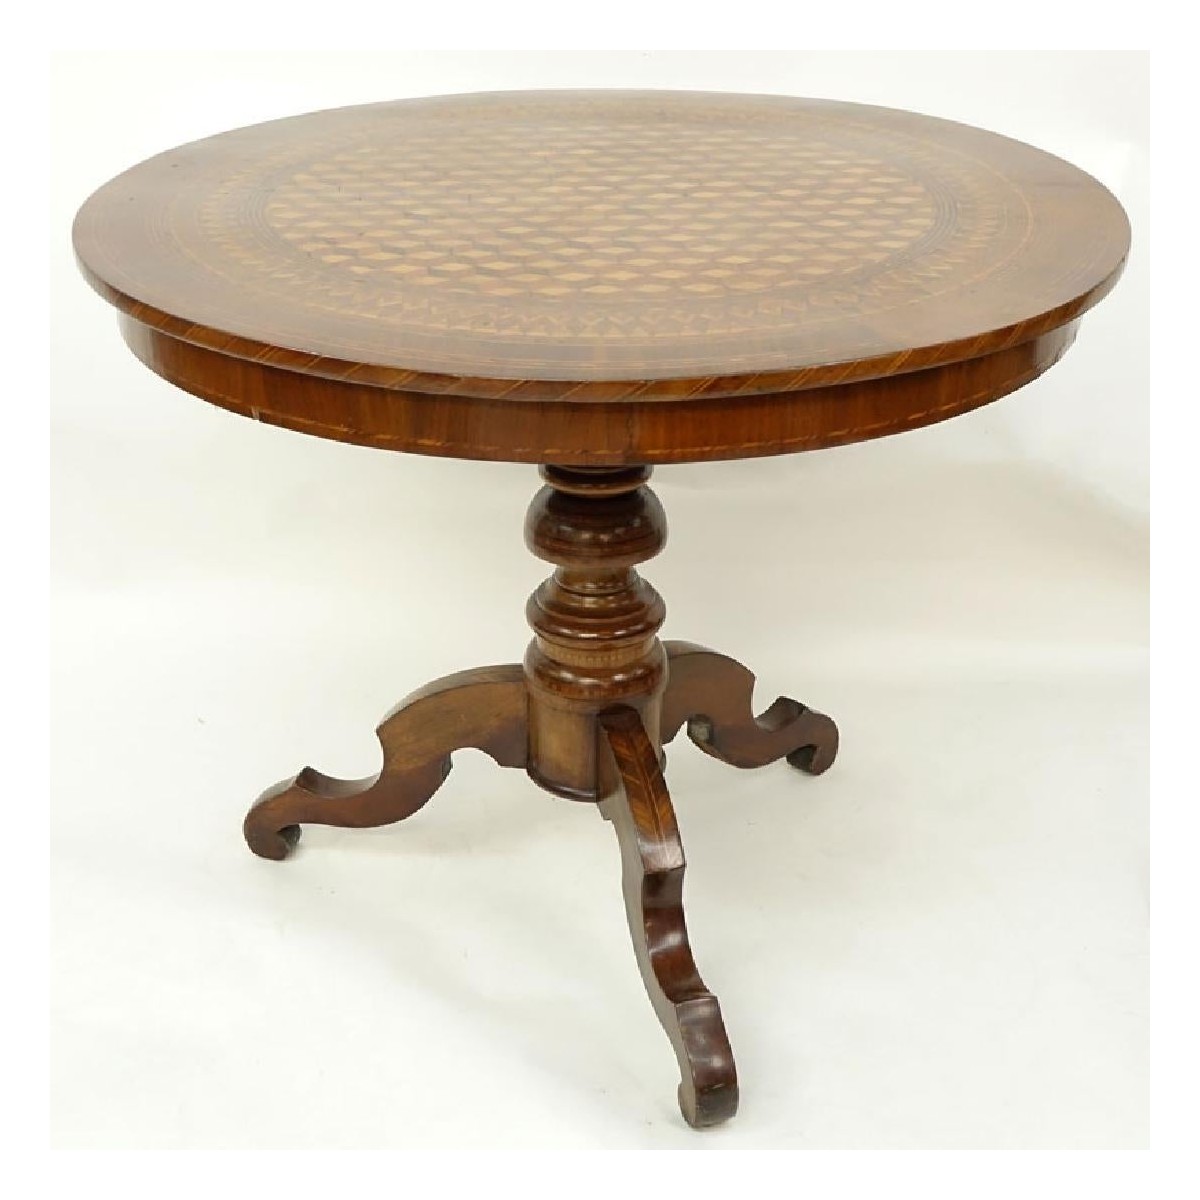 Antique American Pedestal Table